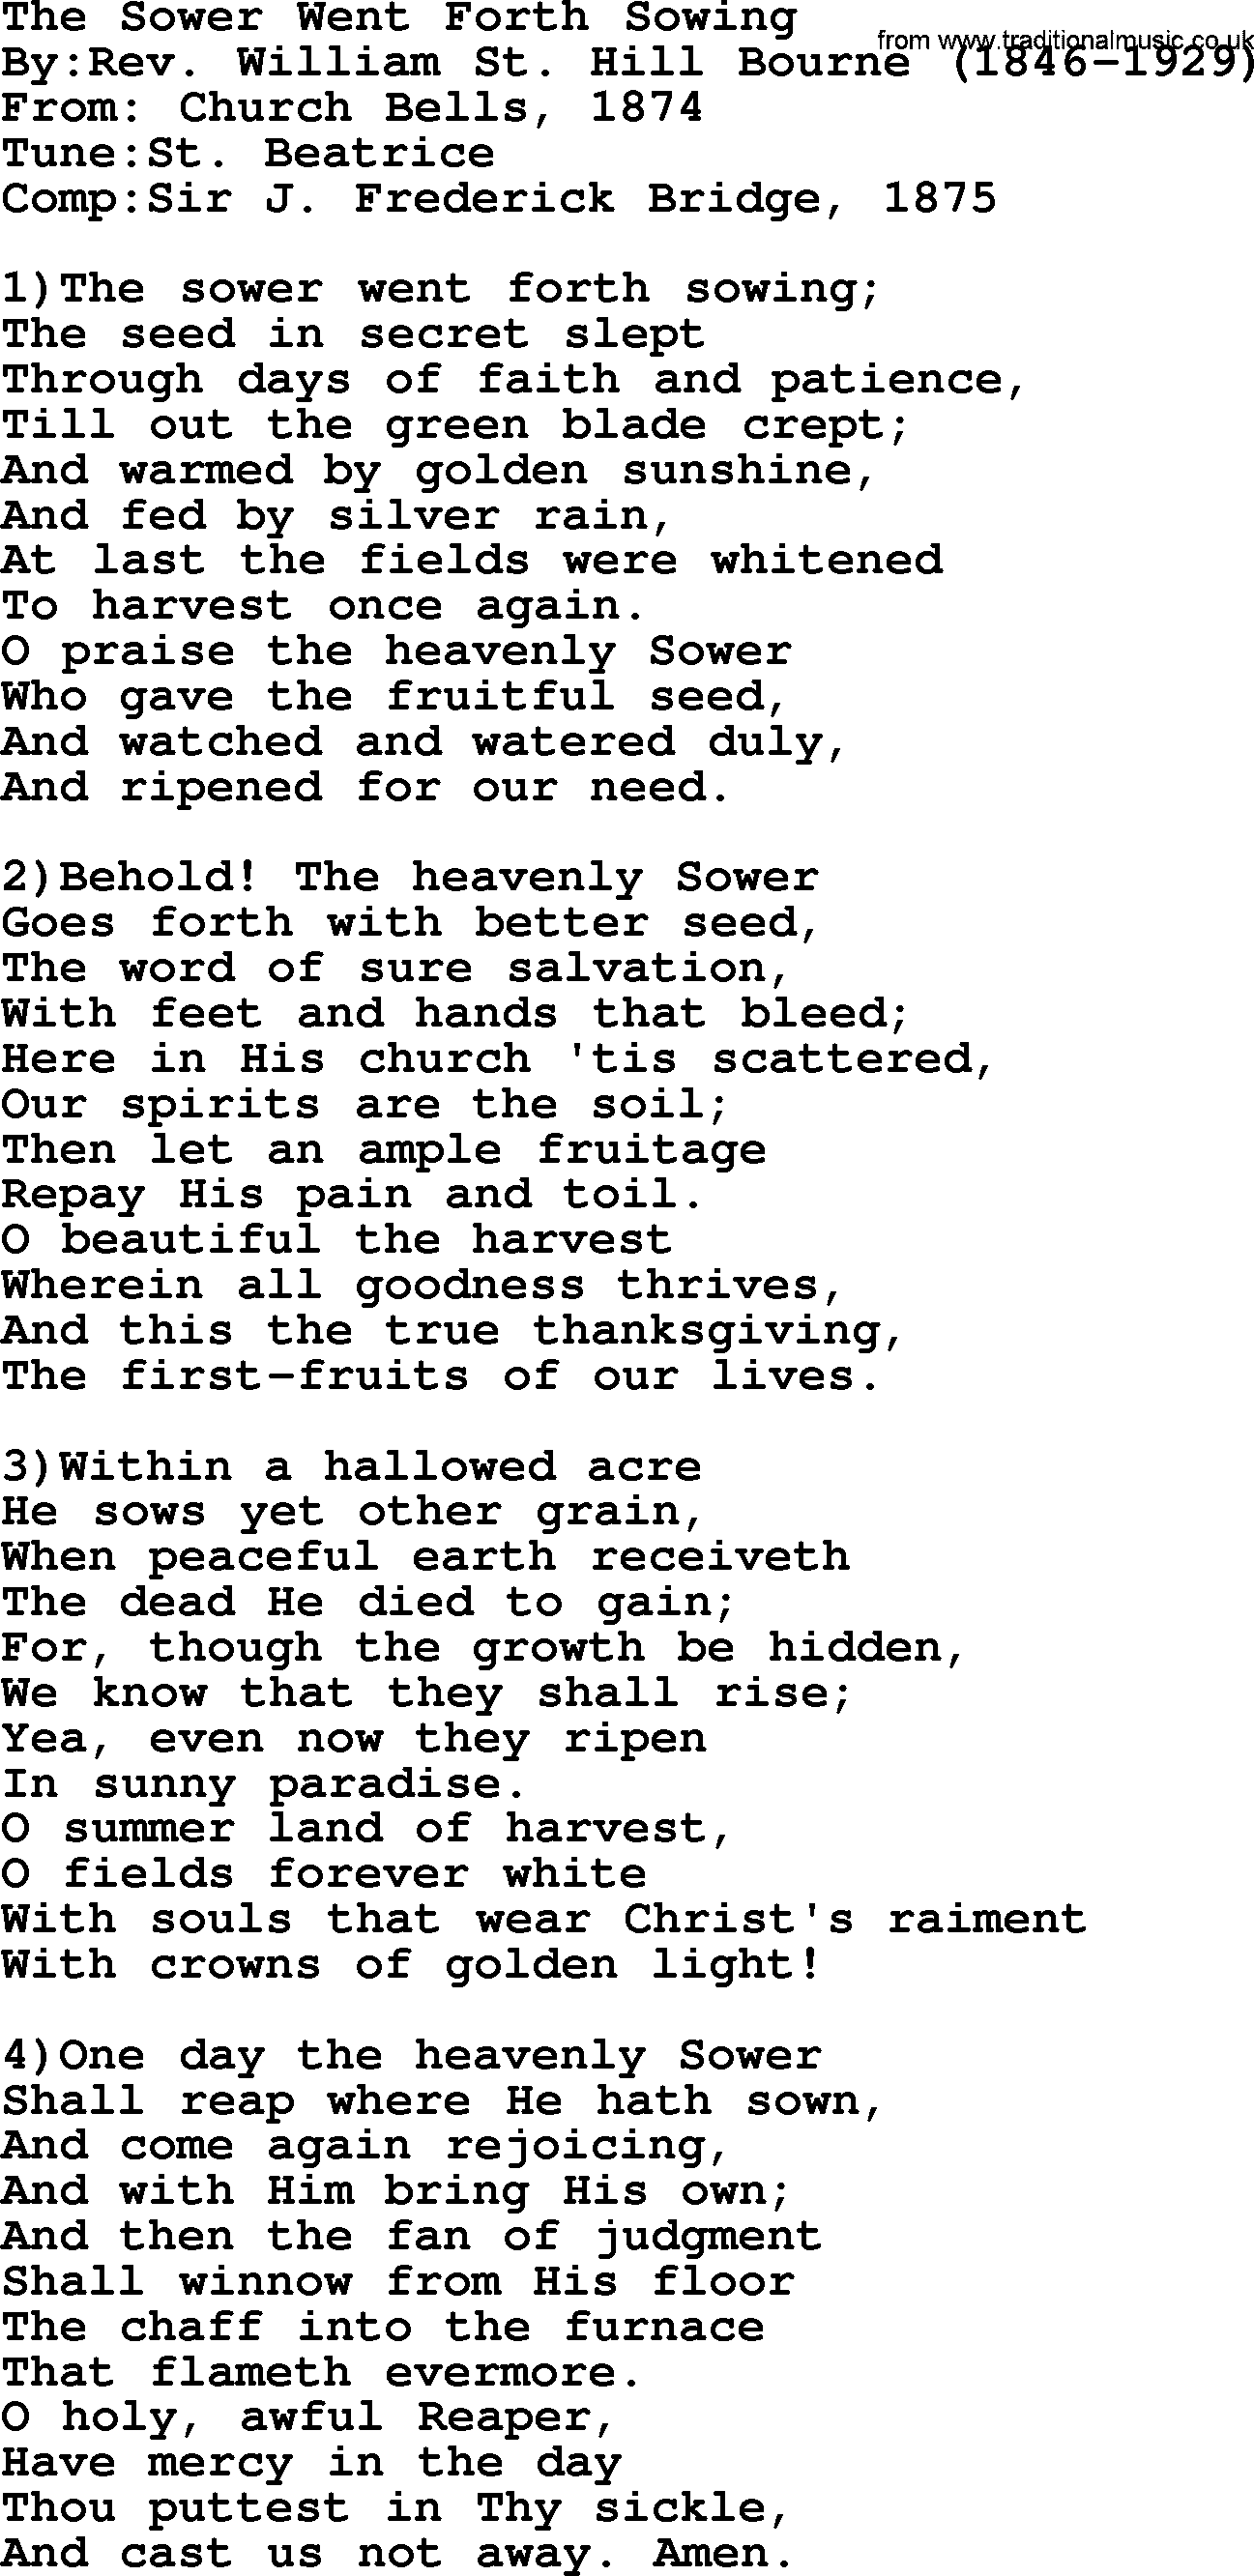 Methodist Hymn: The Sower Went Forth Sowing, lyrics